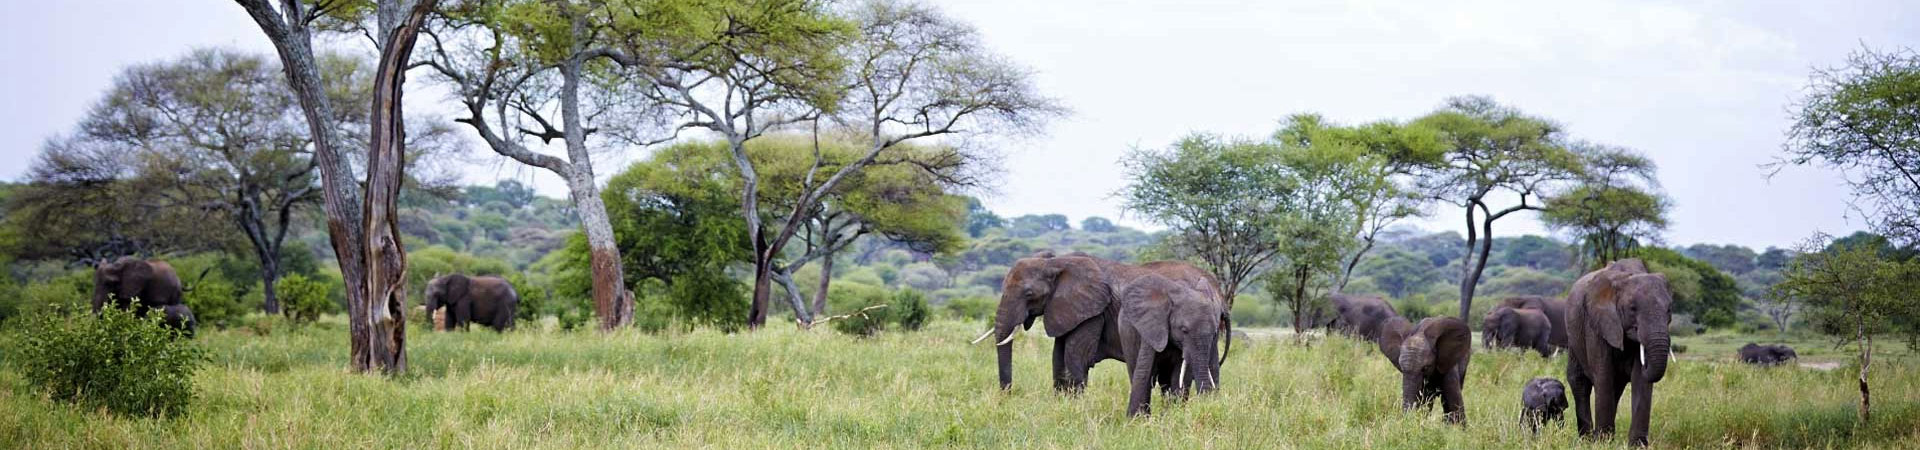 Elephant-in-Tarangire-National-Park